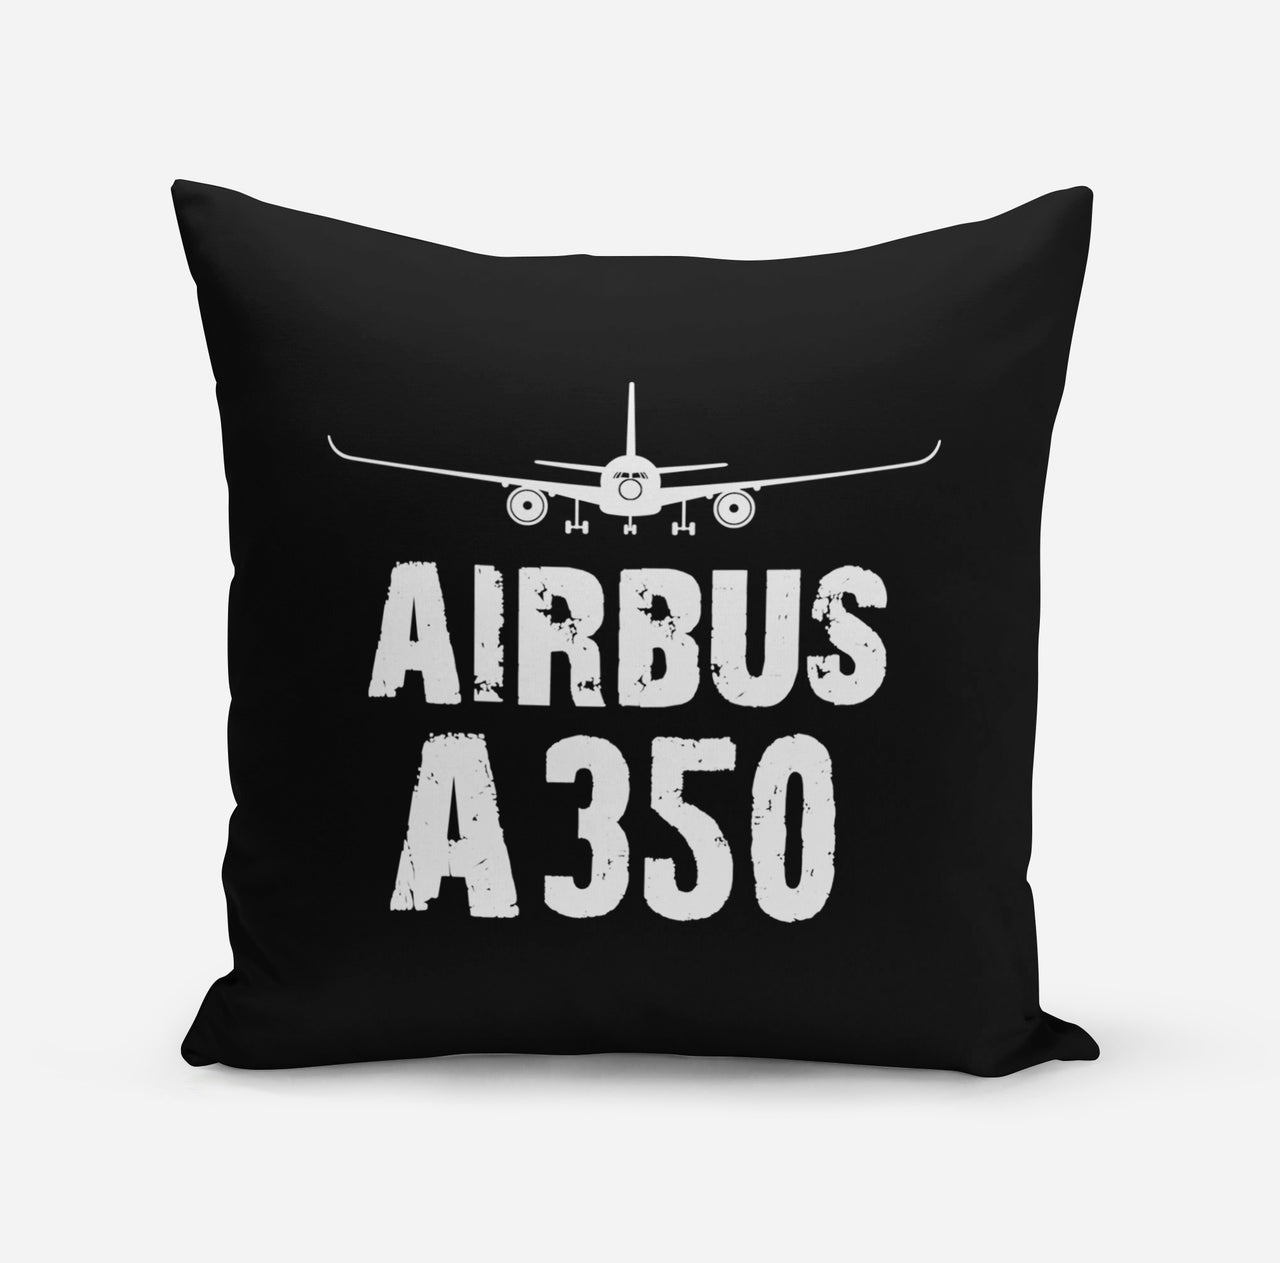 Airbus A350 & Plane Designed Pillows